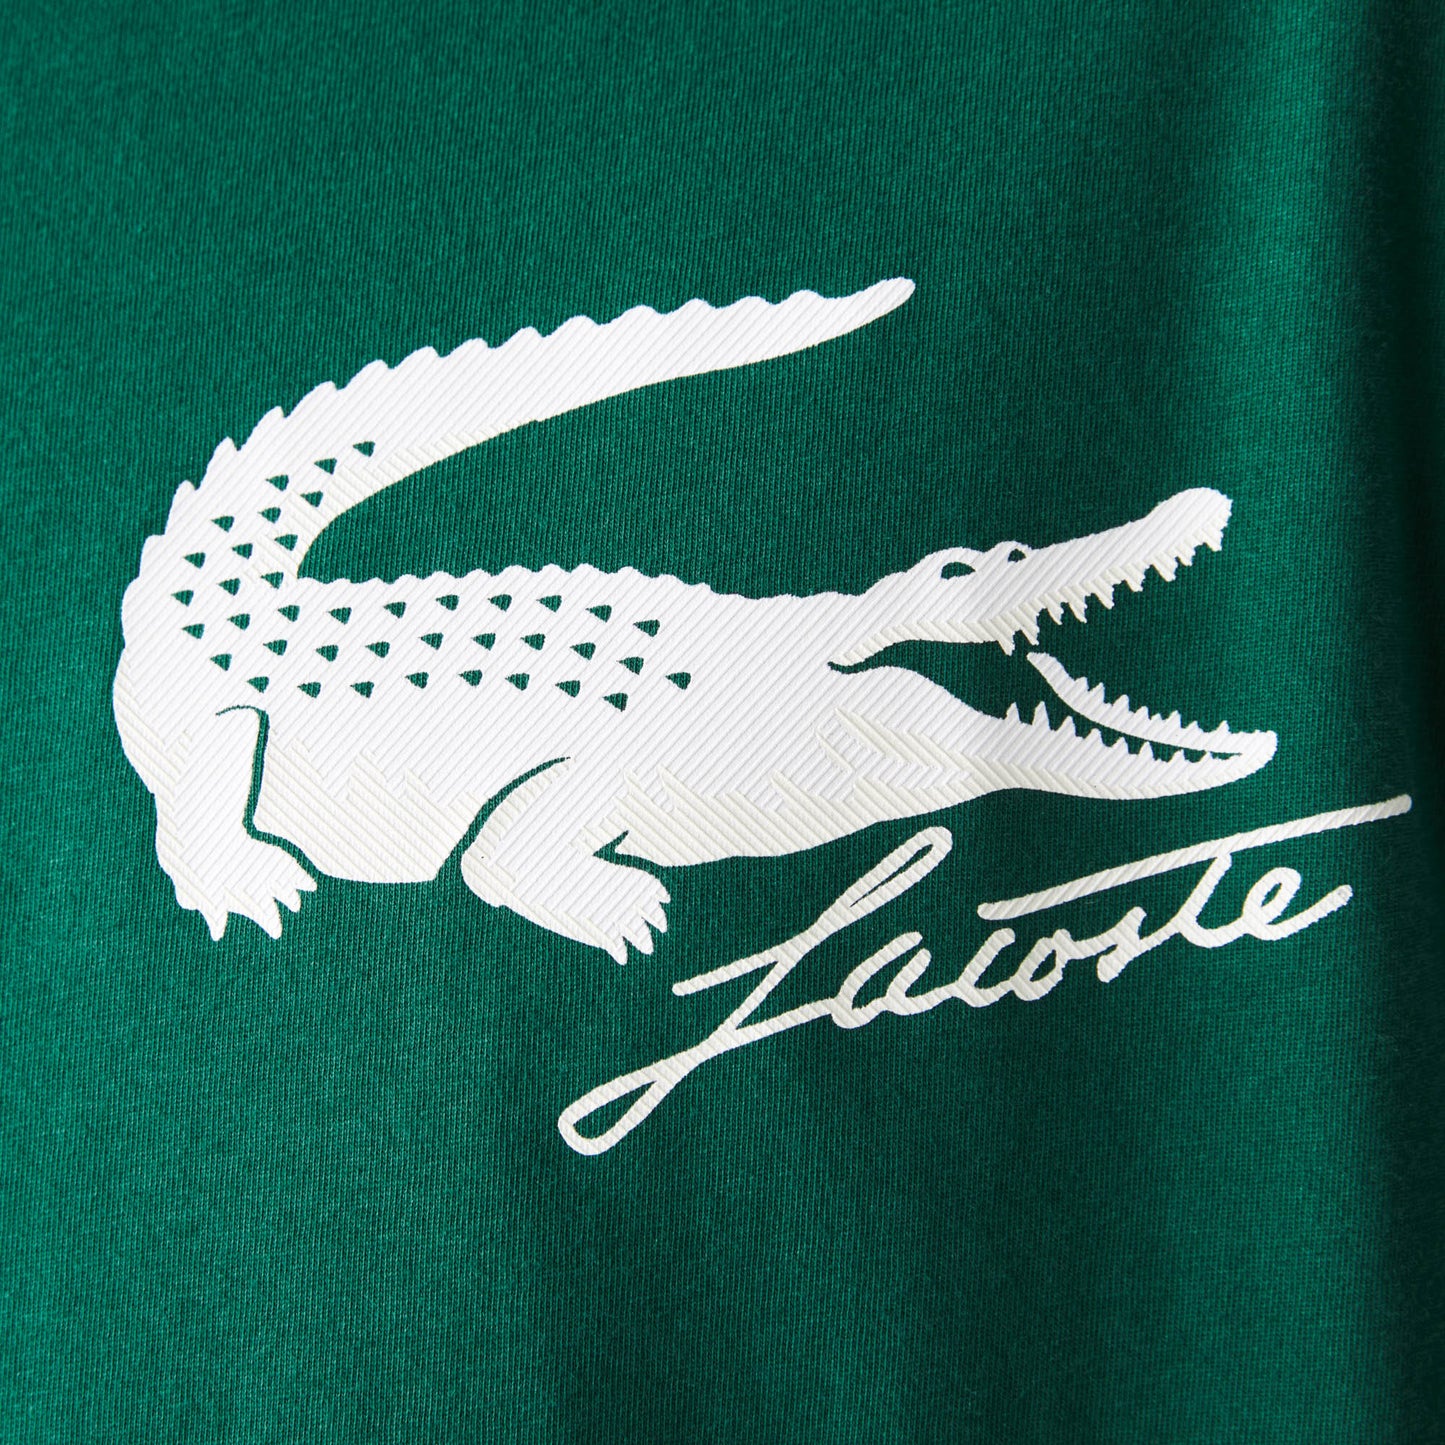 Men’s SPORT French Open Edition Crocodile Print T-shirt